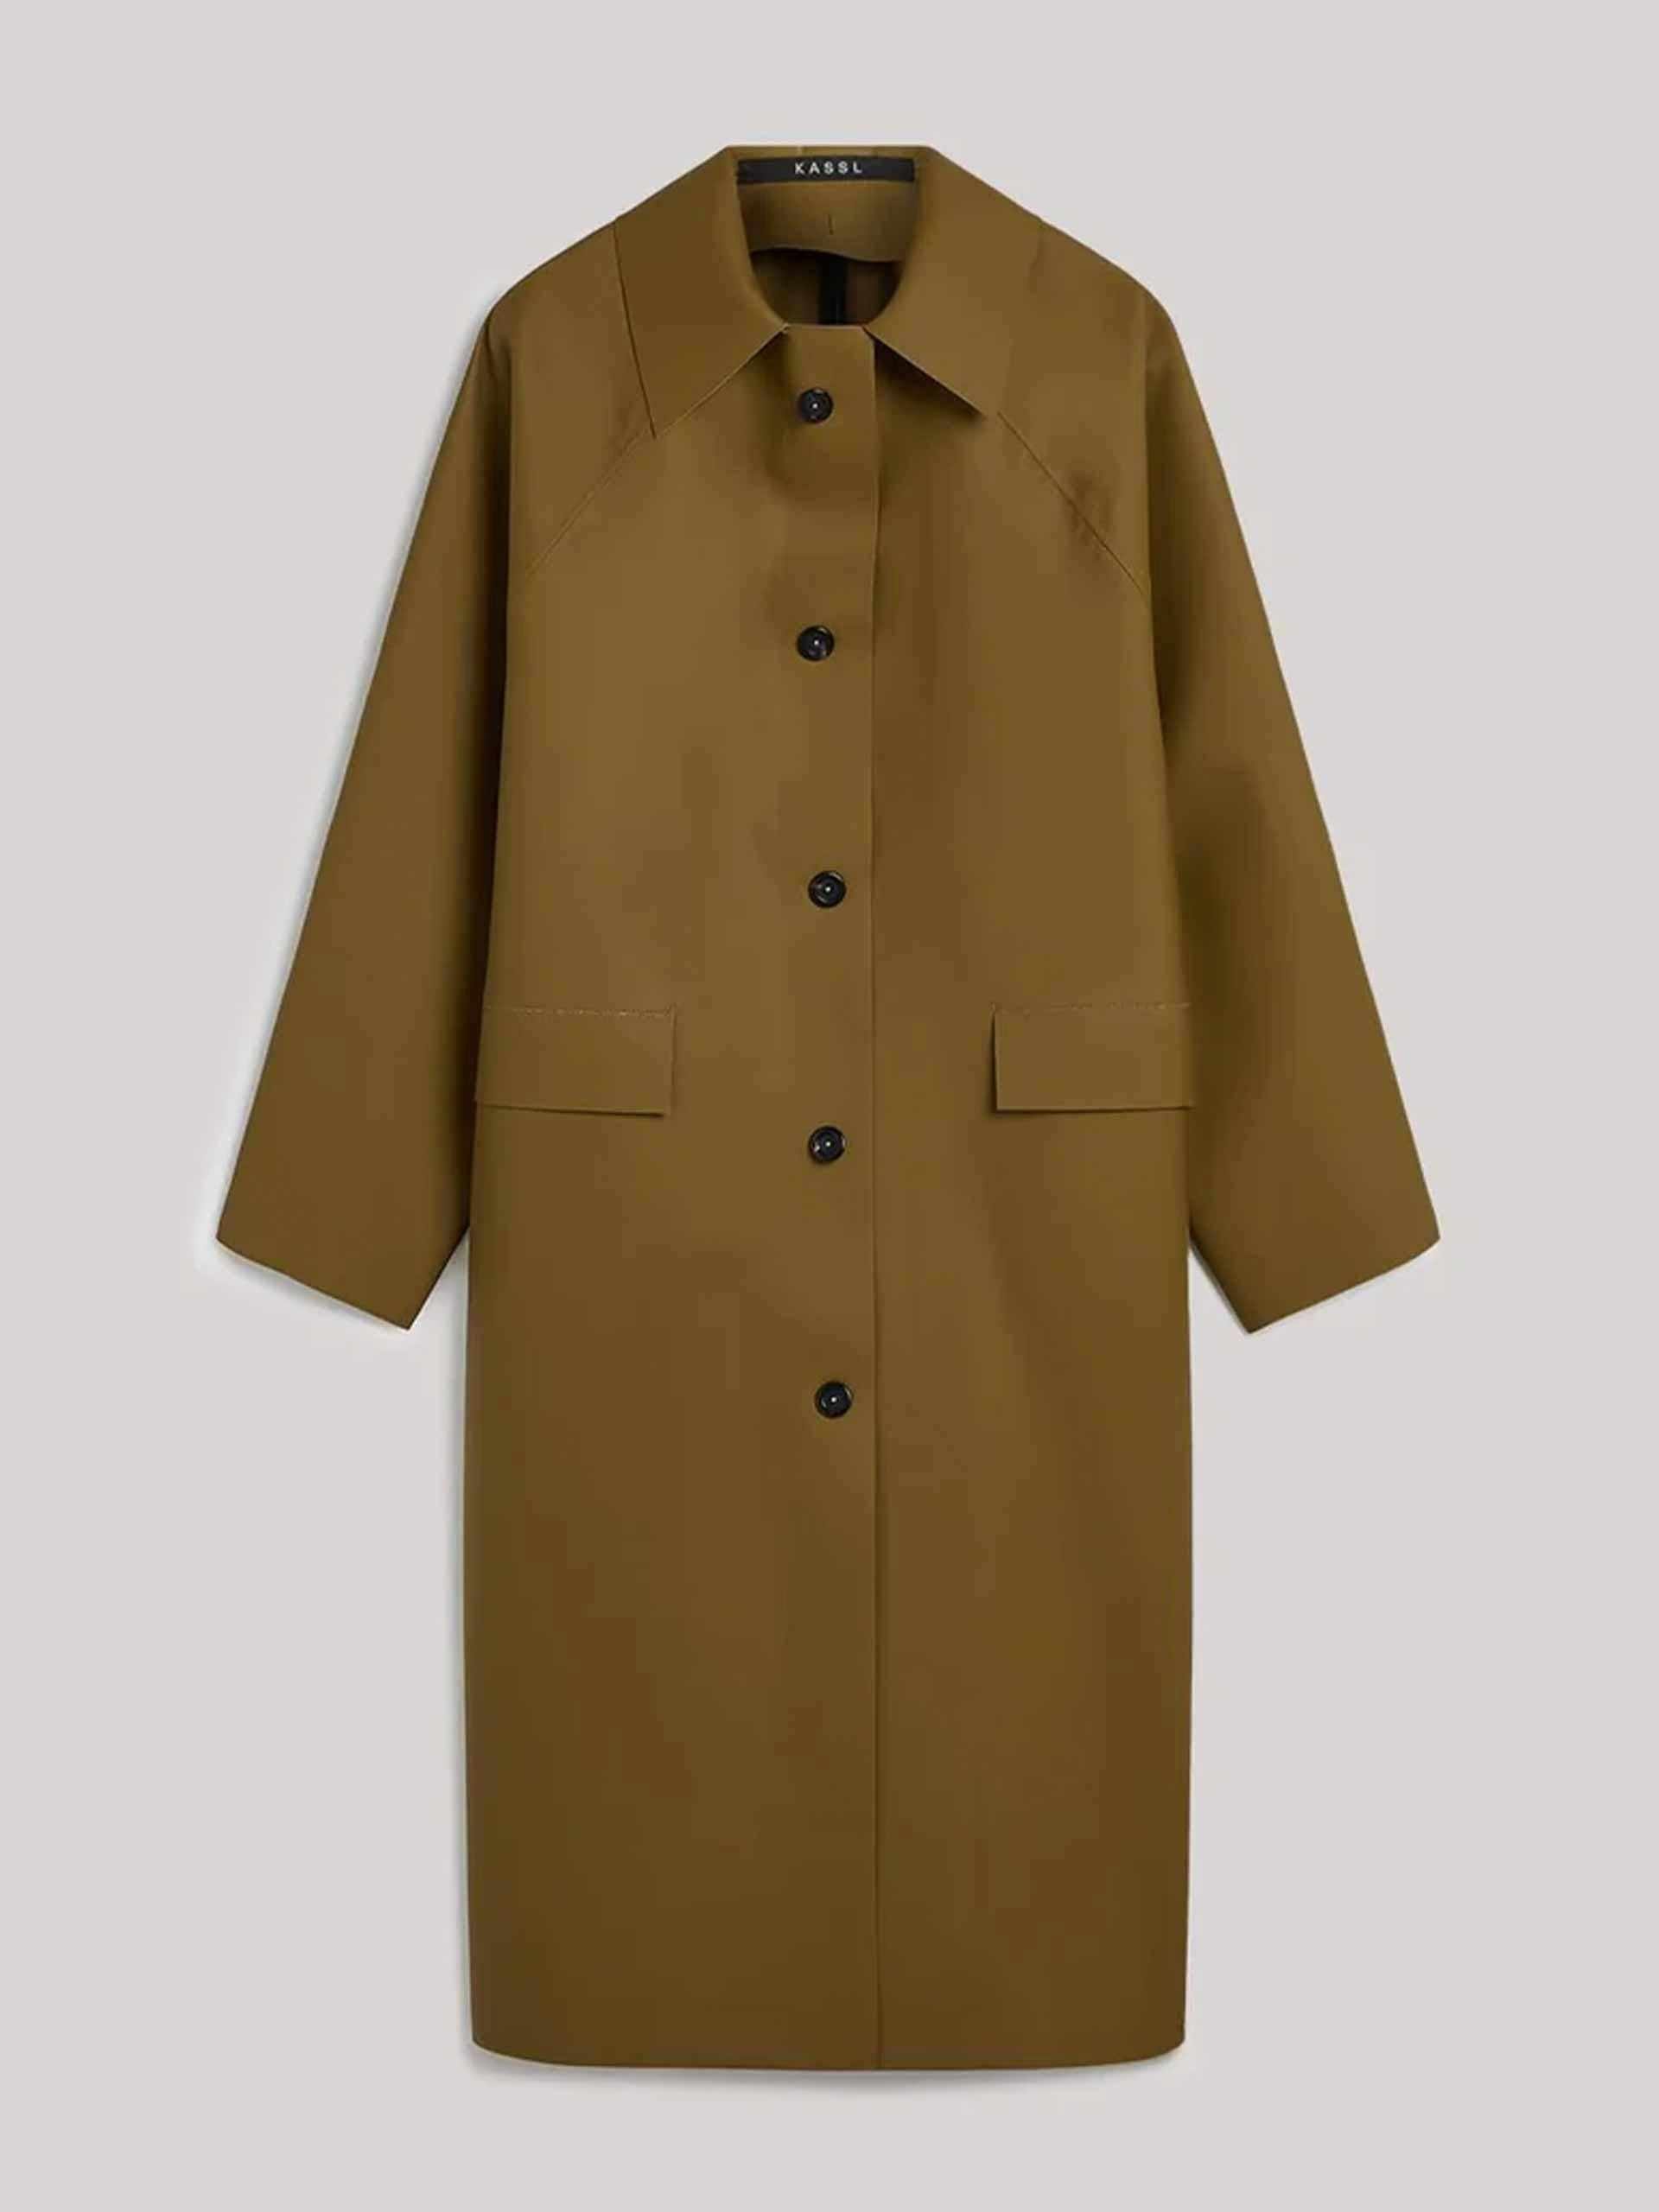 The Original long rubber coat in breen